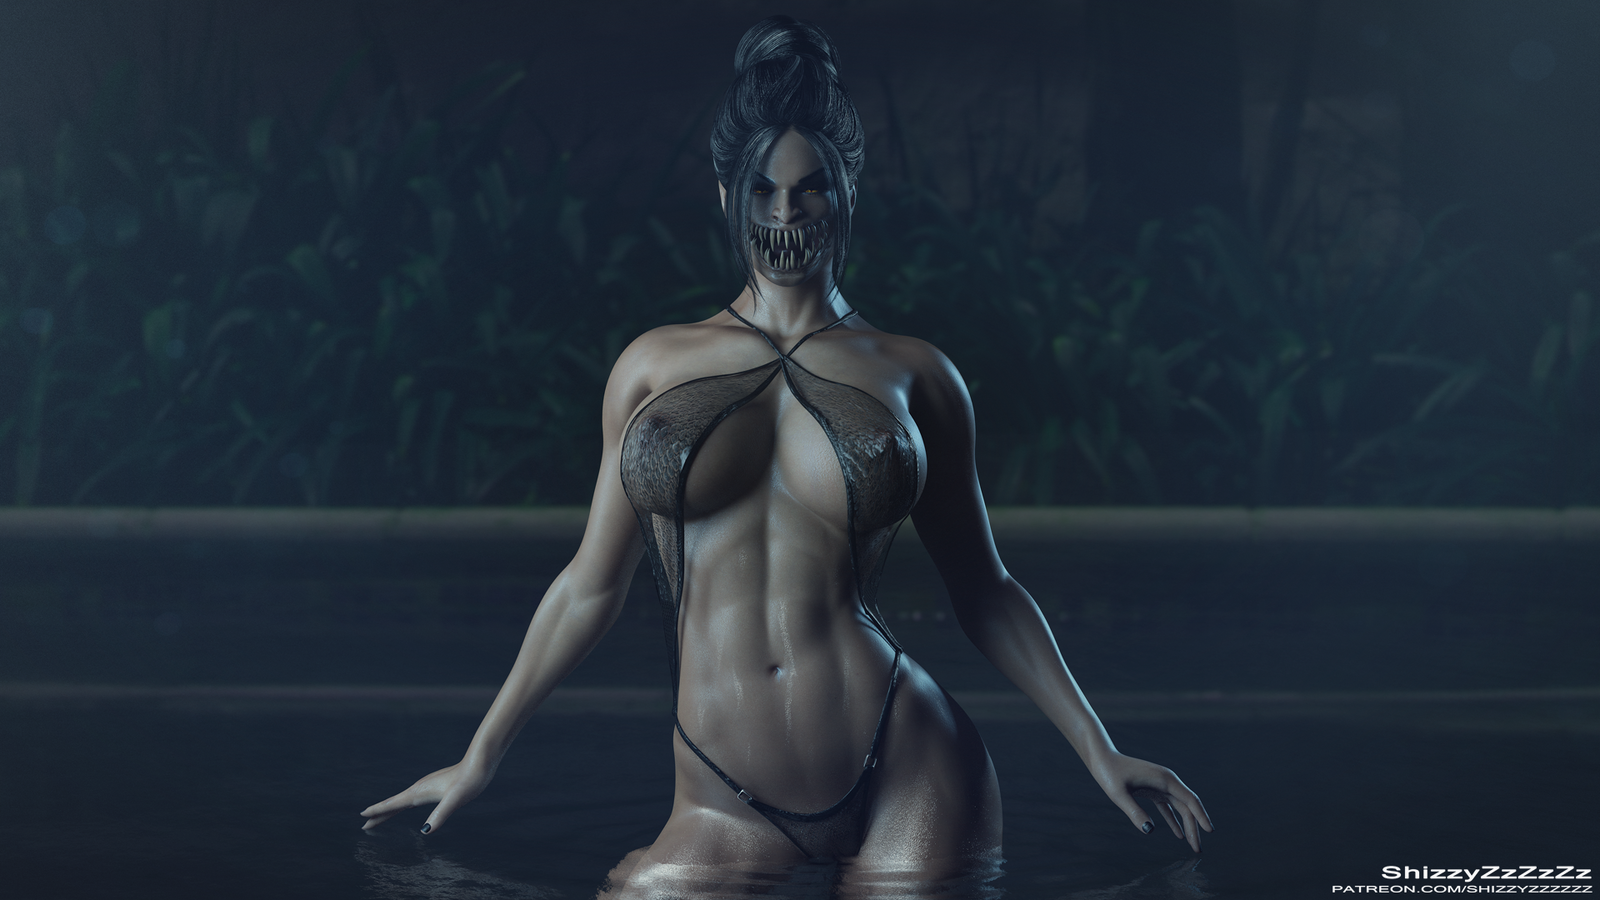 Mileena in Pool - NSFW, Shizzyzzzzzz, Mortal kombat, Milina, Monster girl, Erotic, 3D modeling, Computer games, Games